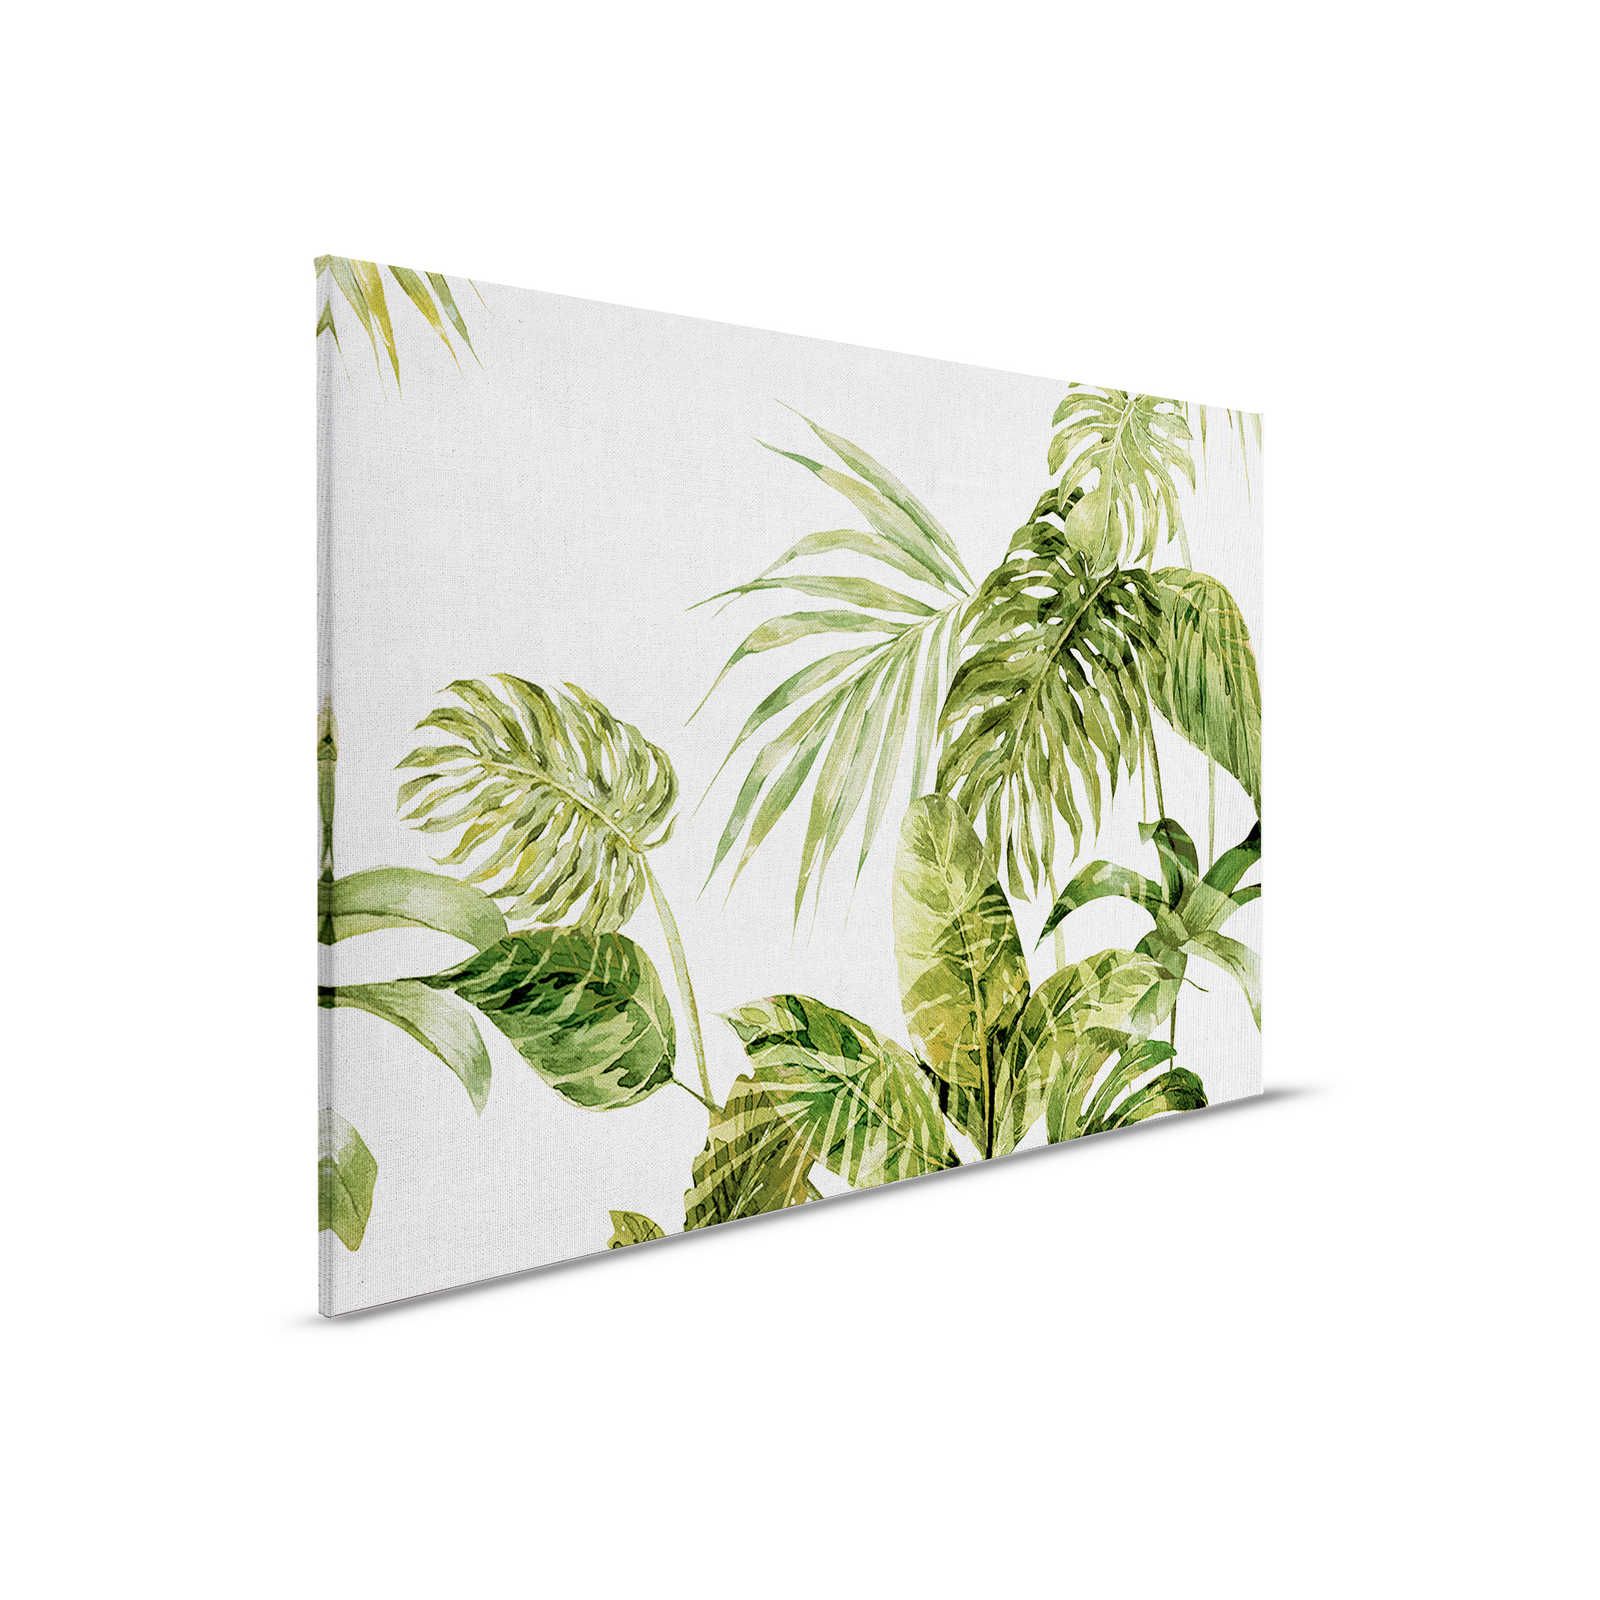 Tropisches Leinwandbild Monstera-Blättern im Aquarell Stil – 0,90 m x 0,60 m
